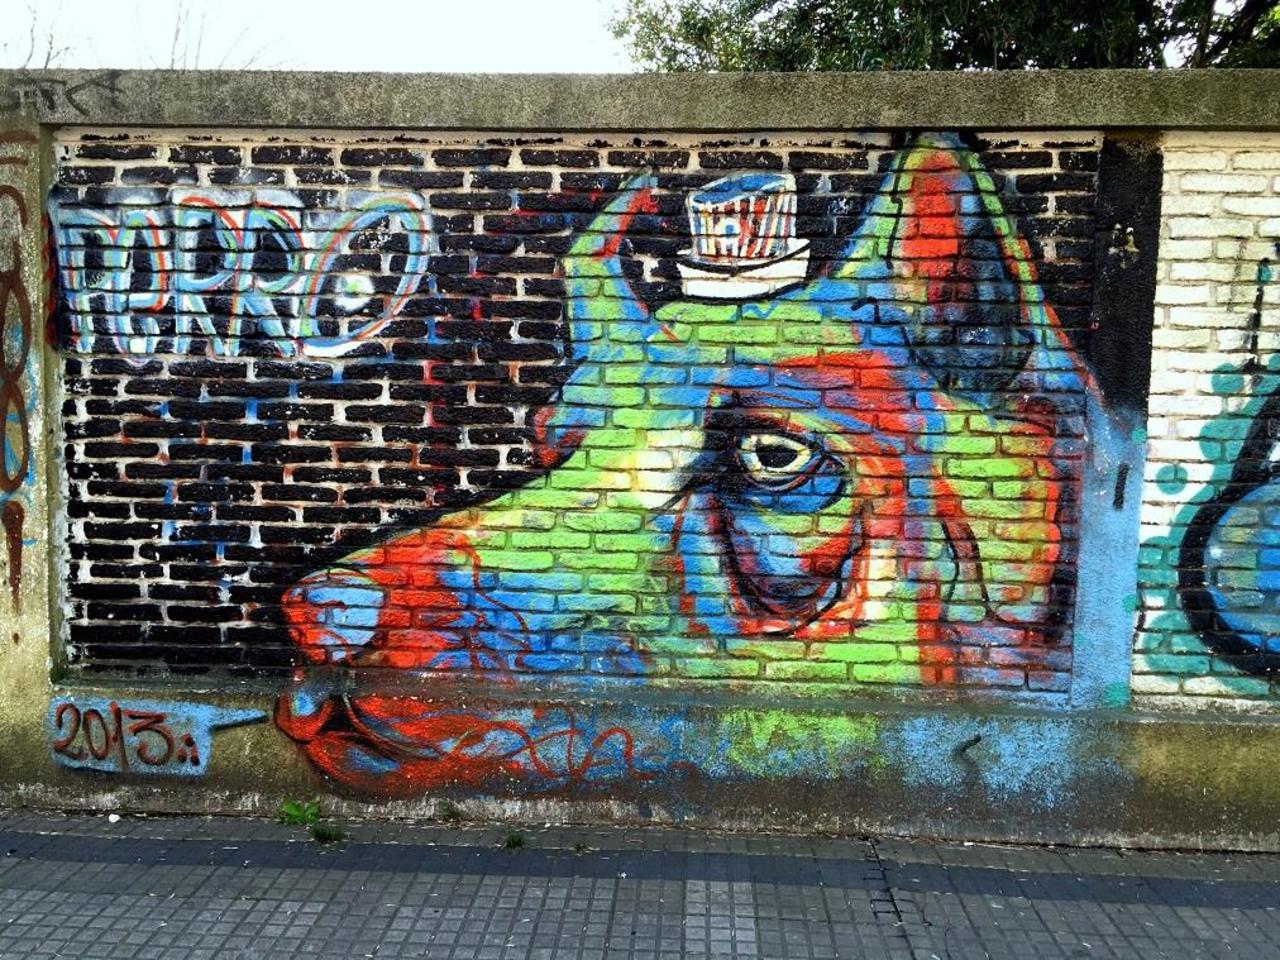 #Graffiti de hoy: << El perro >> calle 9, 66y67 #LaPlata #Argentina #StreetArt #UrbanArt #ArteUrbano http://t.co/3tEWPIKdAK